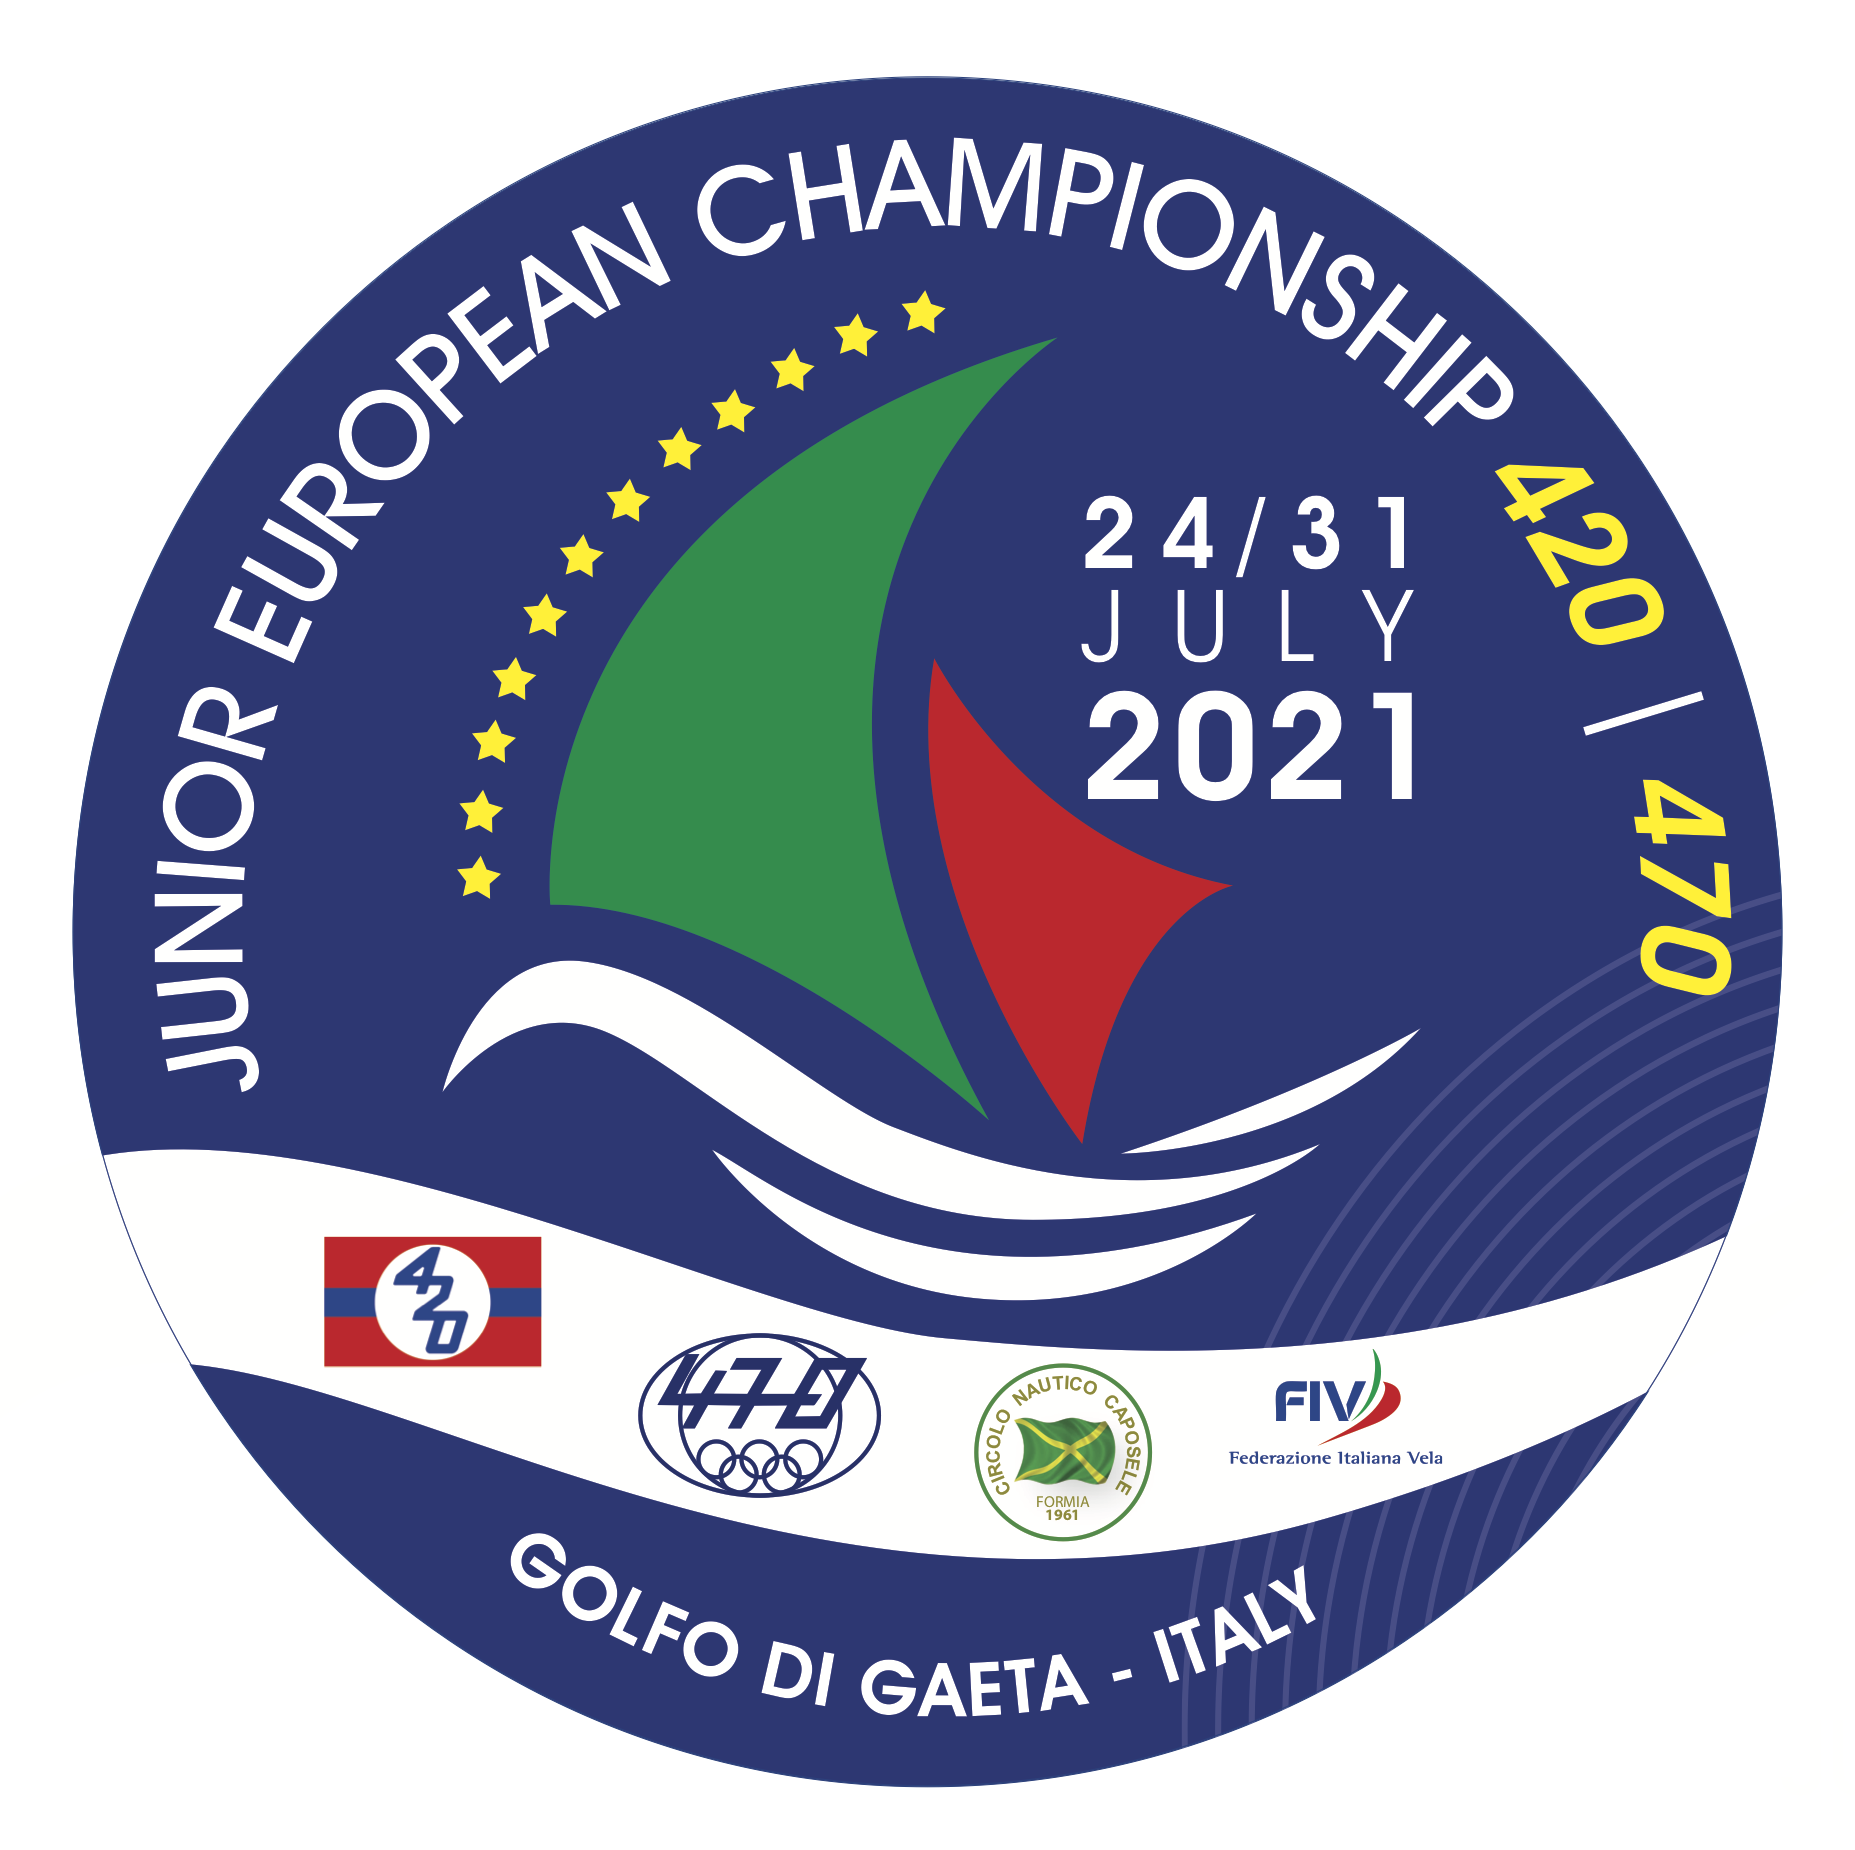 Logo II Tappa Optisud 2021